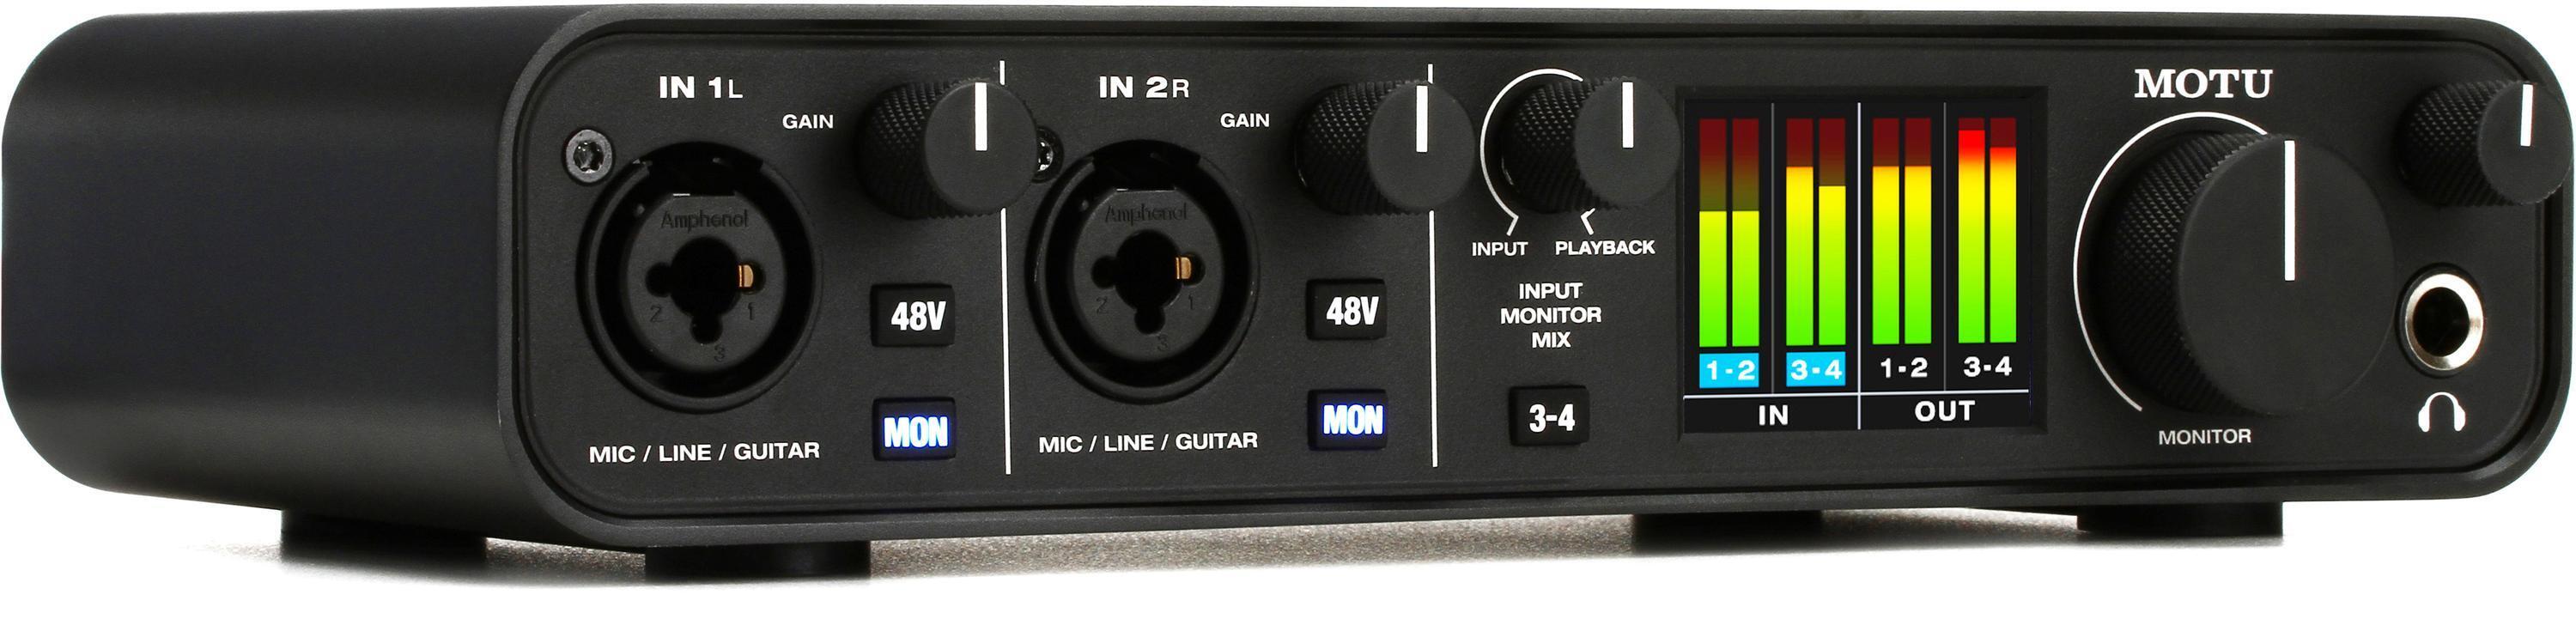 MOTU M4 4x4 USB-C Audio Interface | Sweetwater